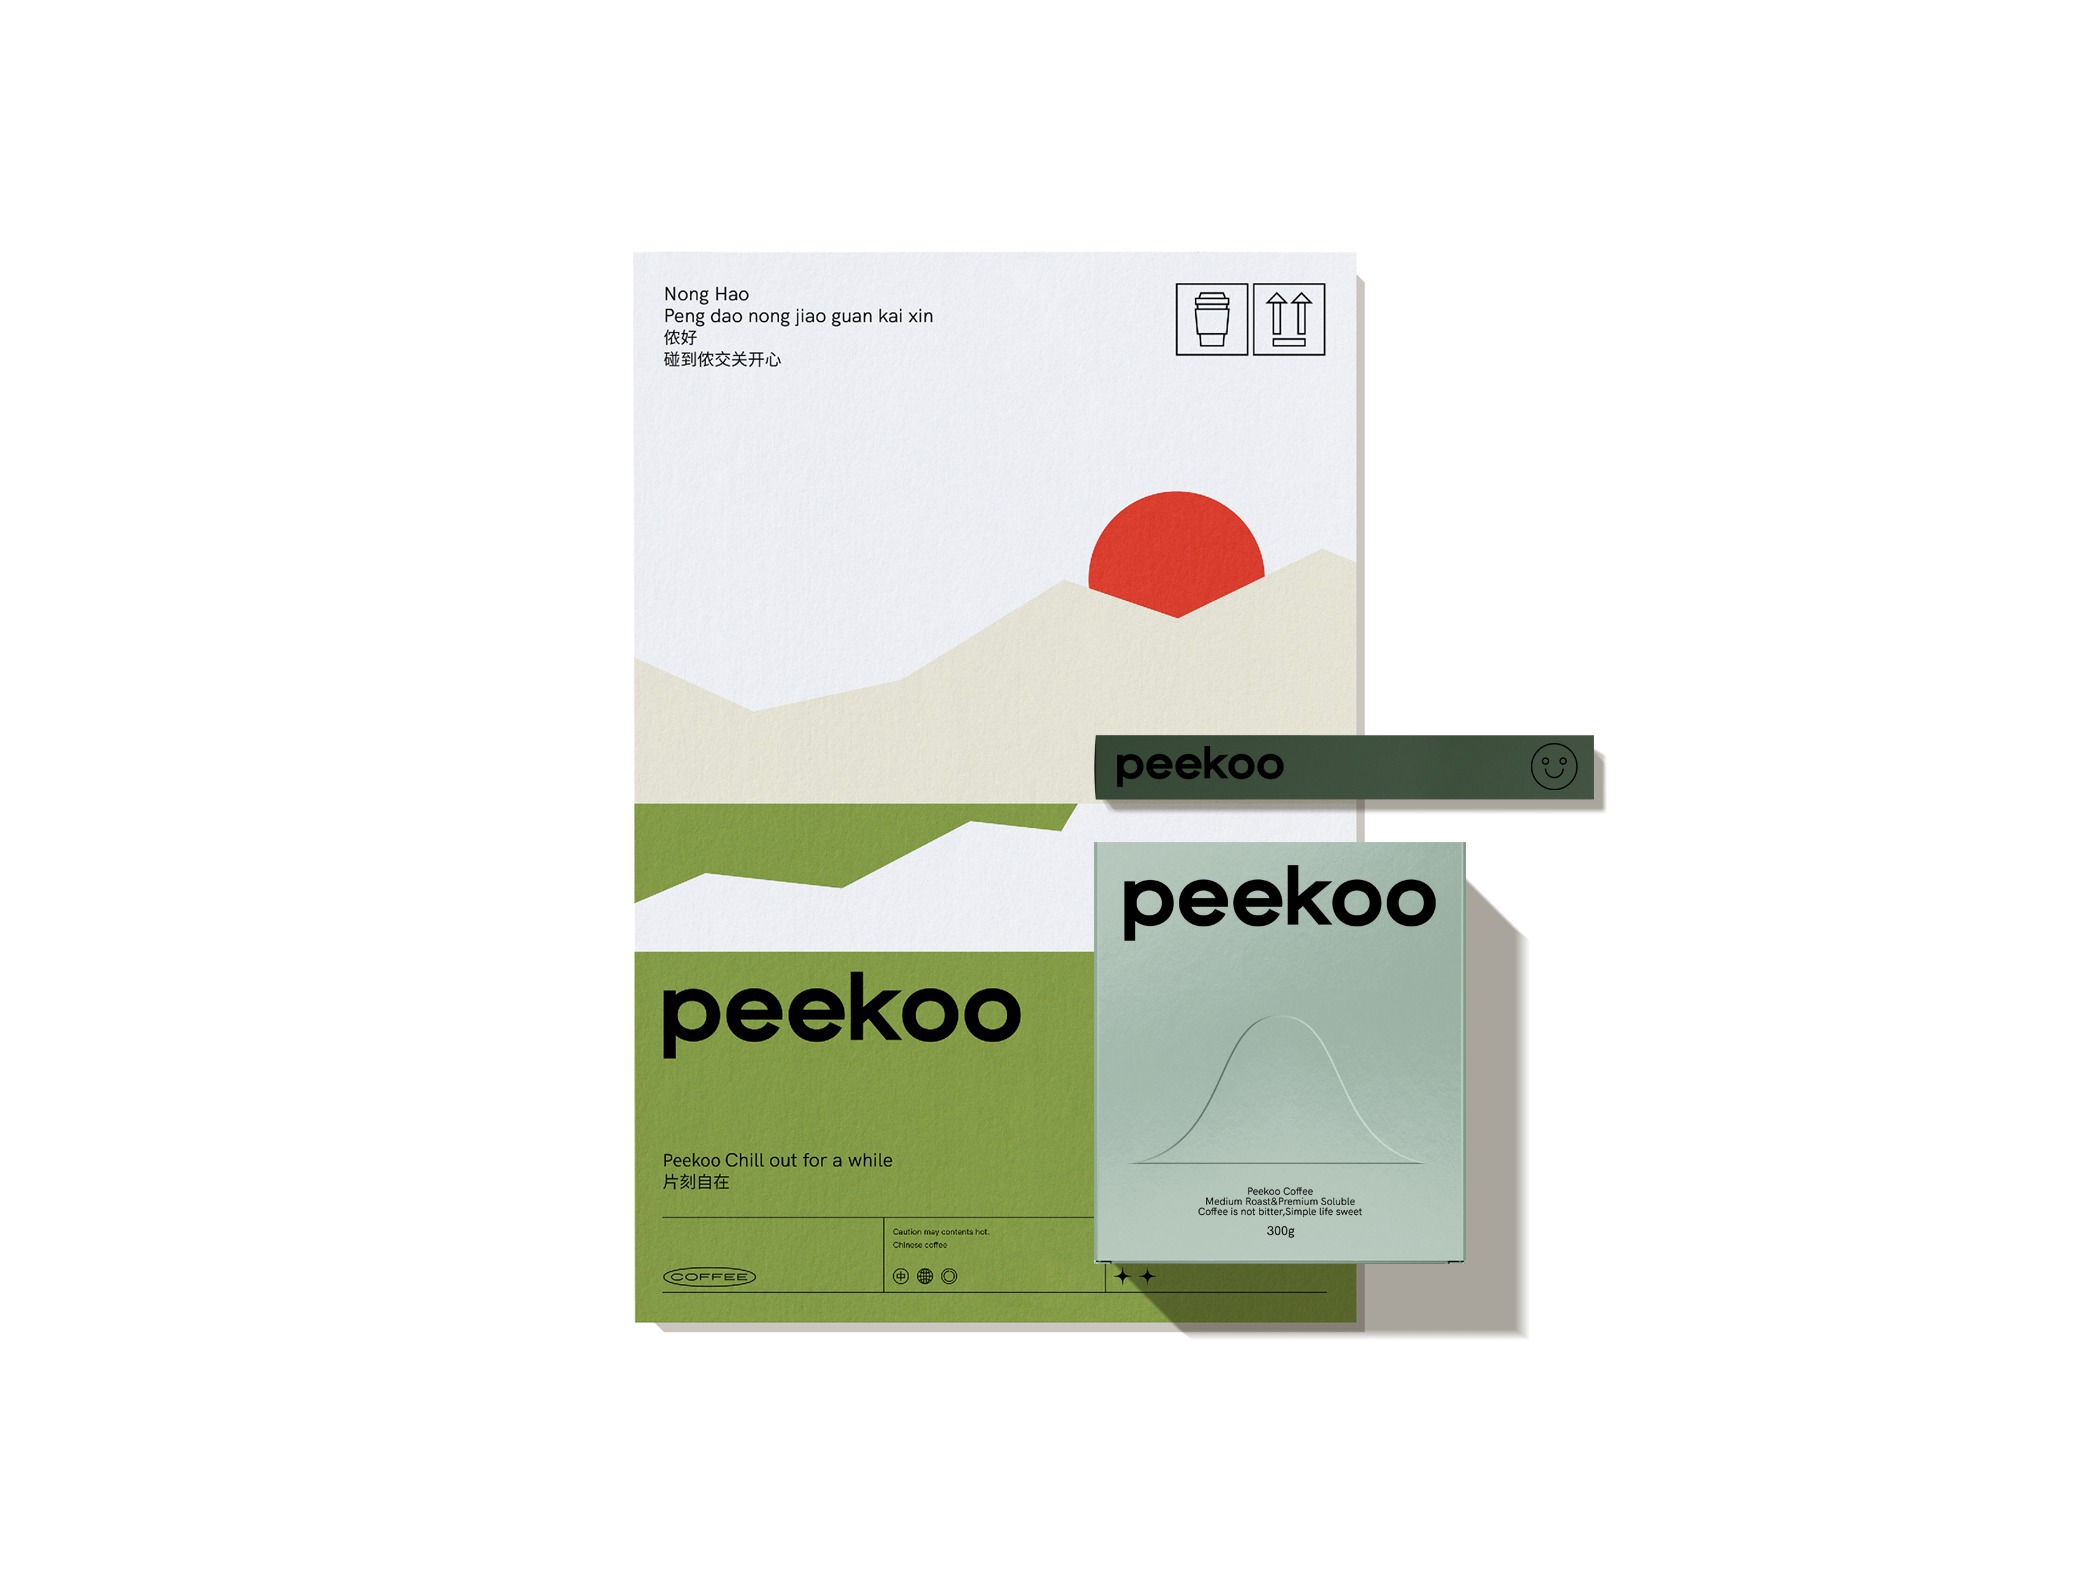 Peekoo Coffee Brand